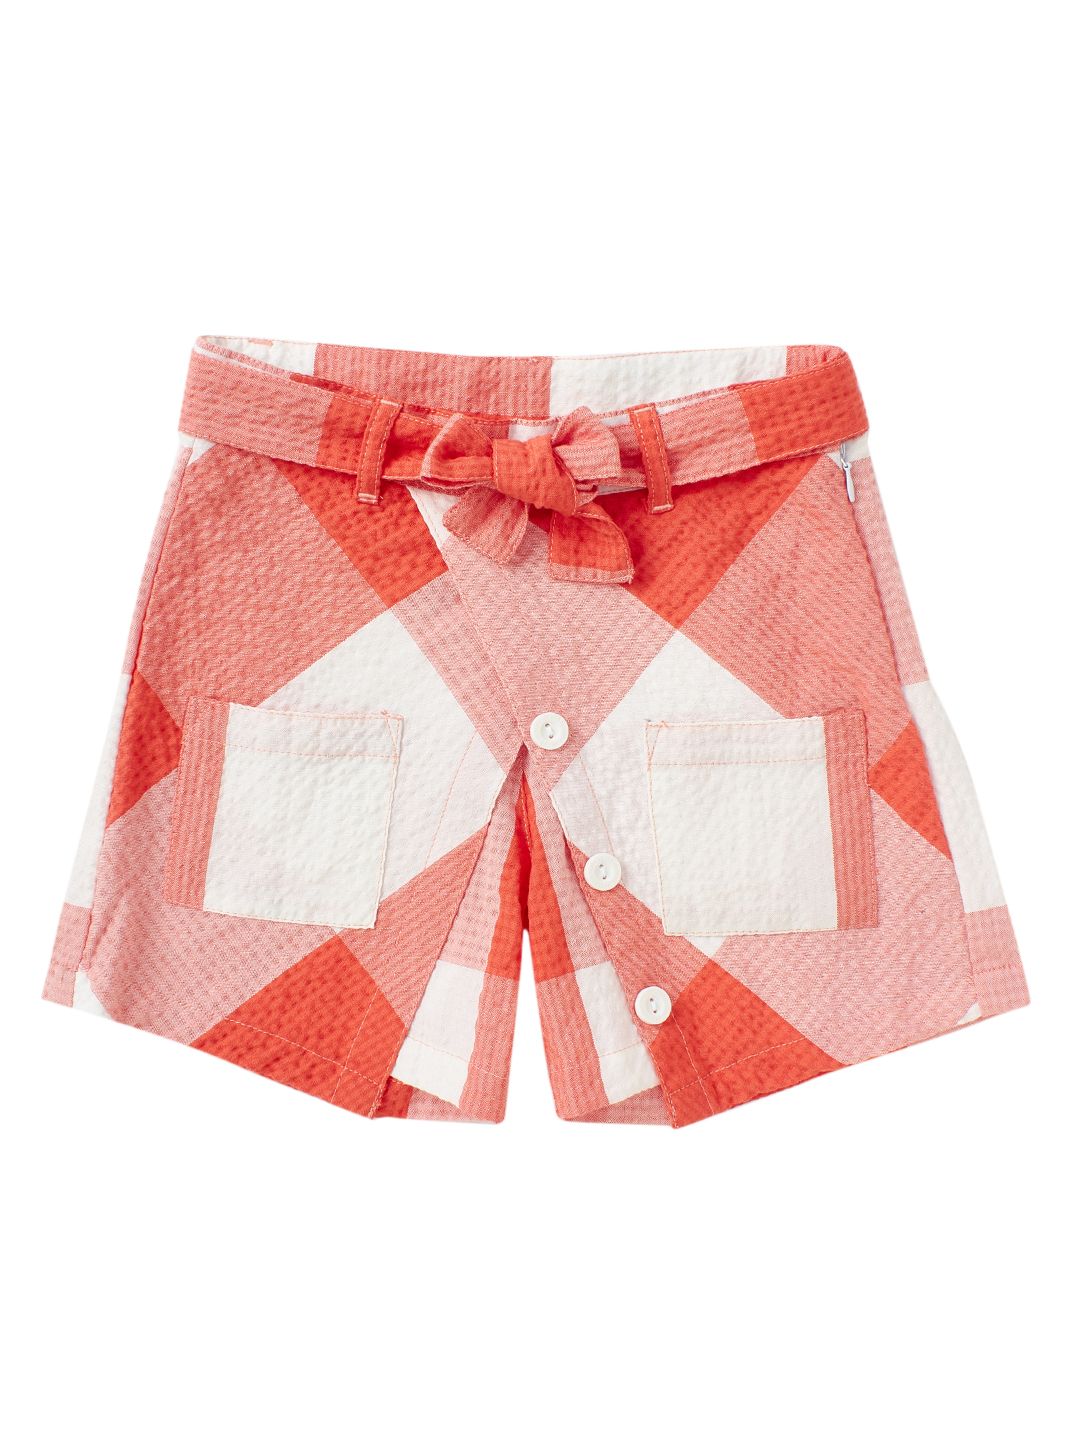 Girls Fashion Checkered Print Shorts, Red